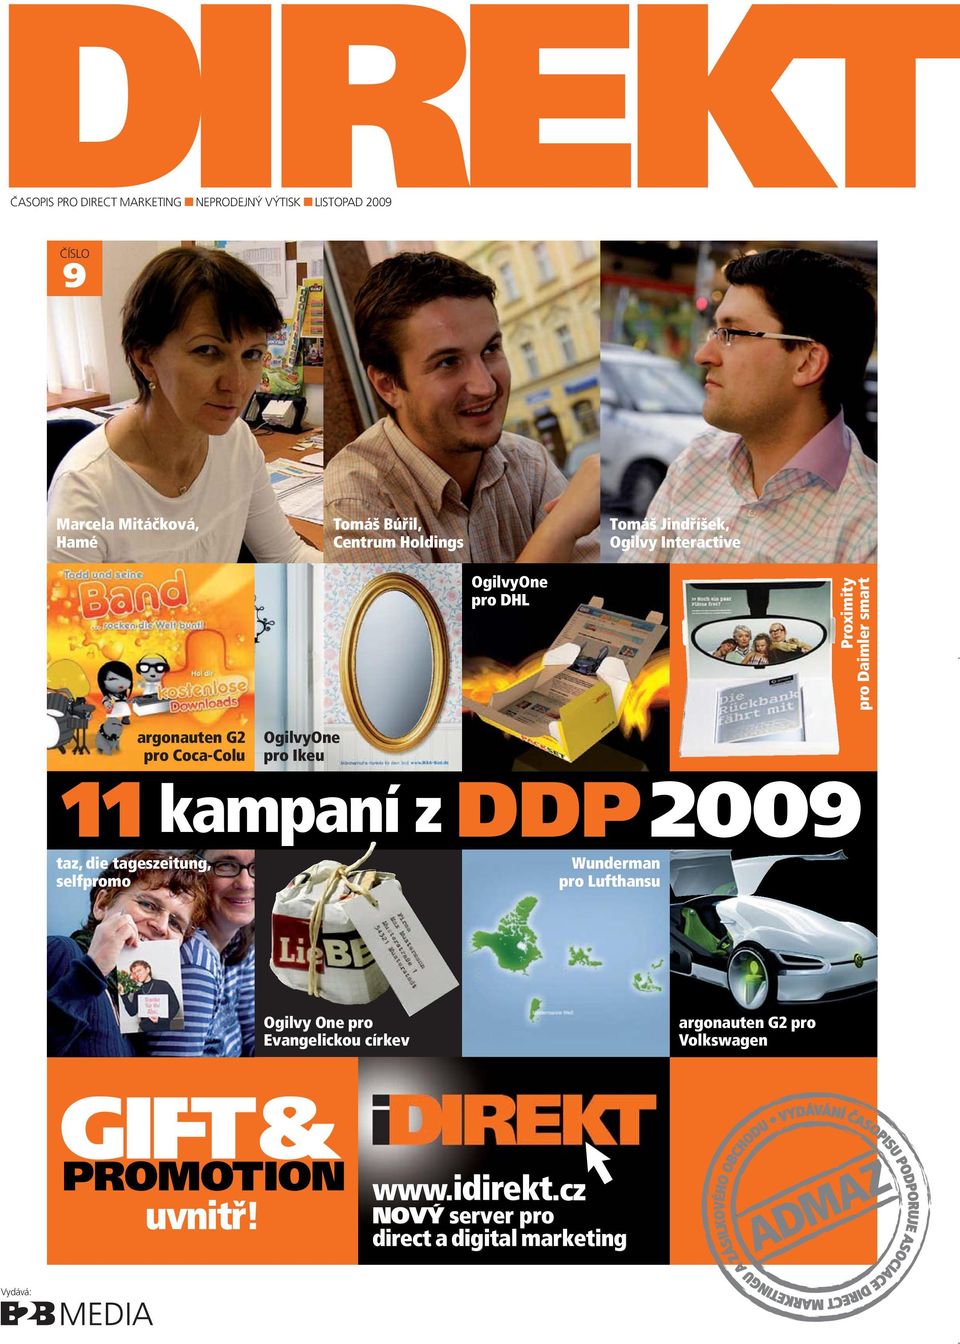 Coca-Colu OgilvyOne pro Ikeu 11 kampaní z DDP2009 taz, die tageszeitung, selfpromo Wunderman pro Lufthansu Ogilvy